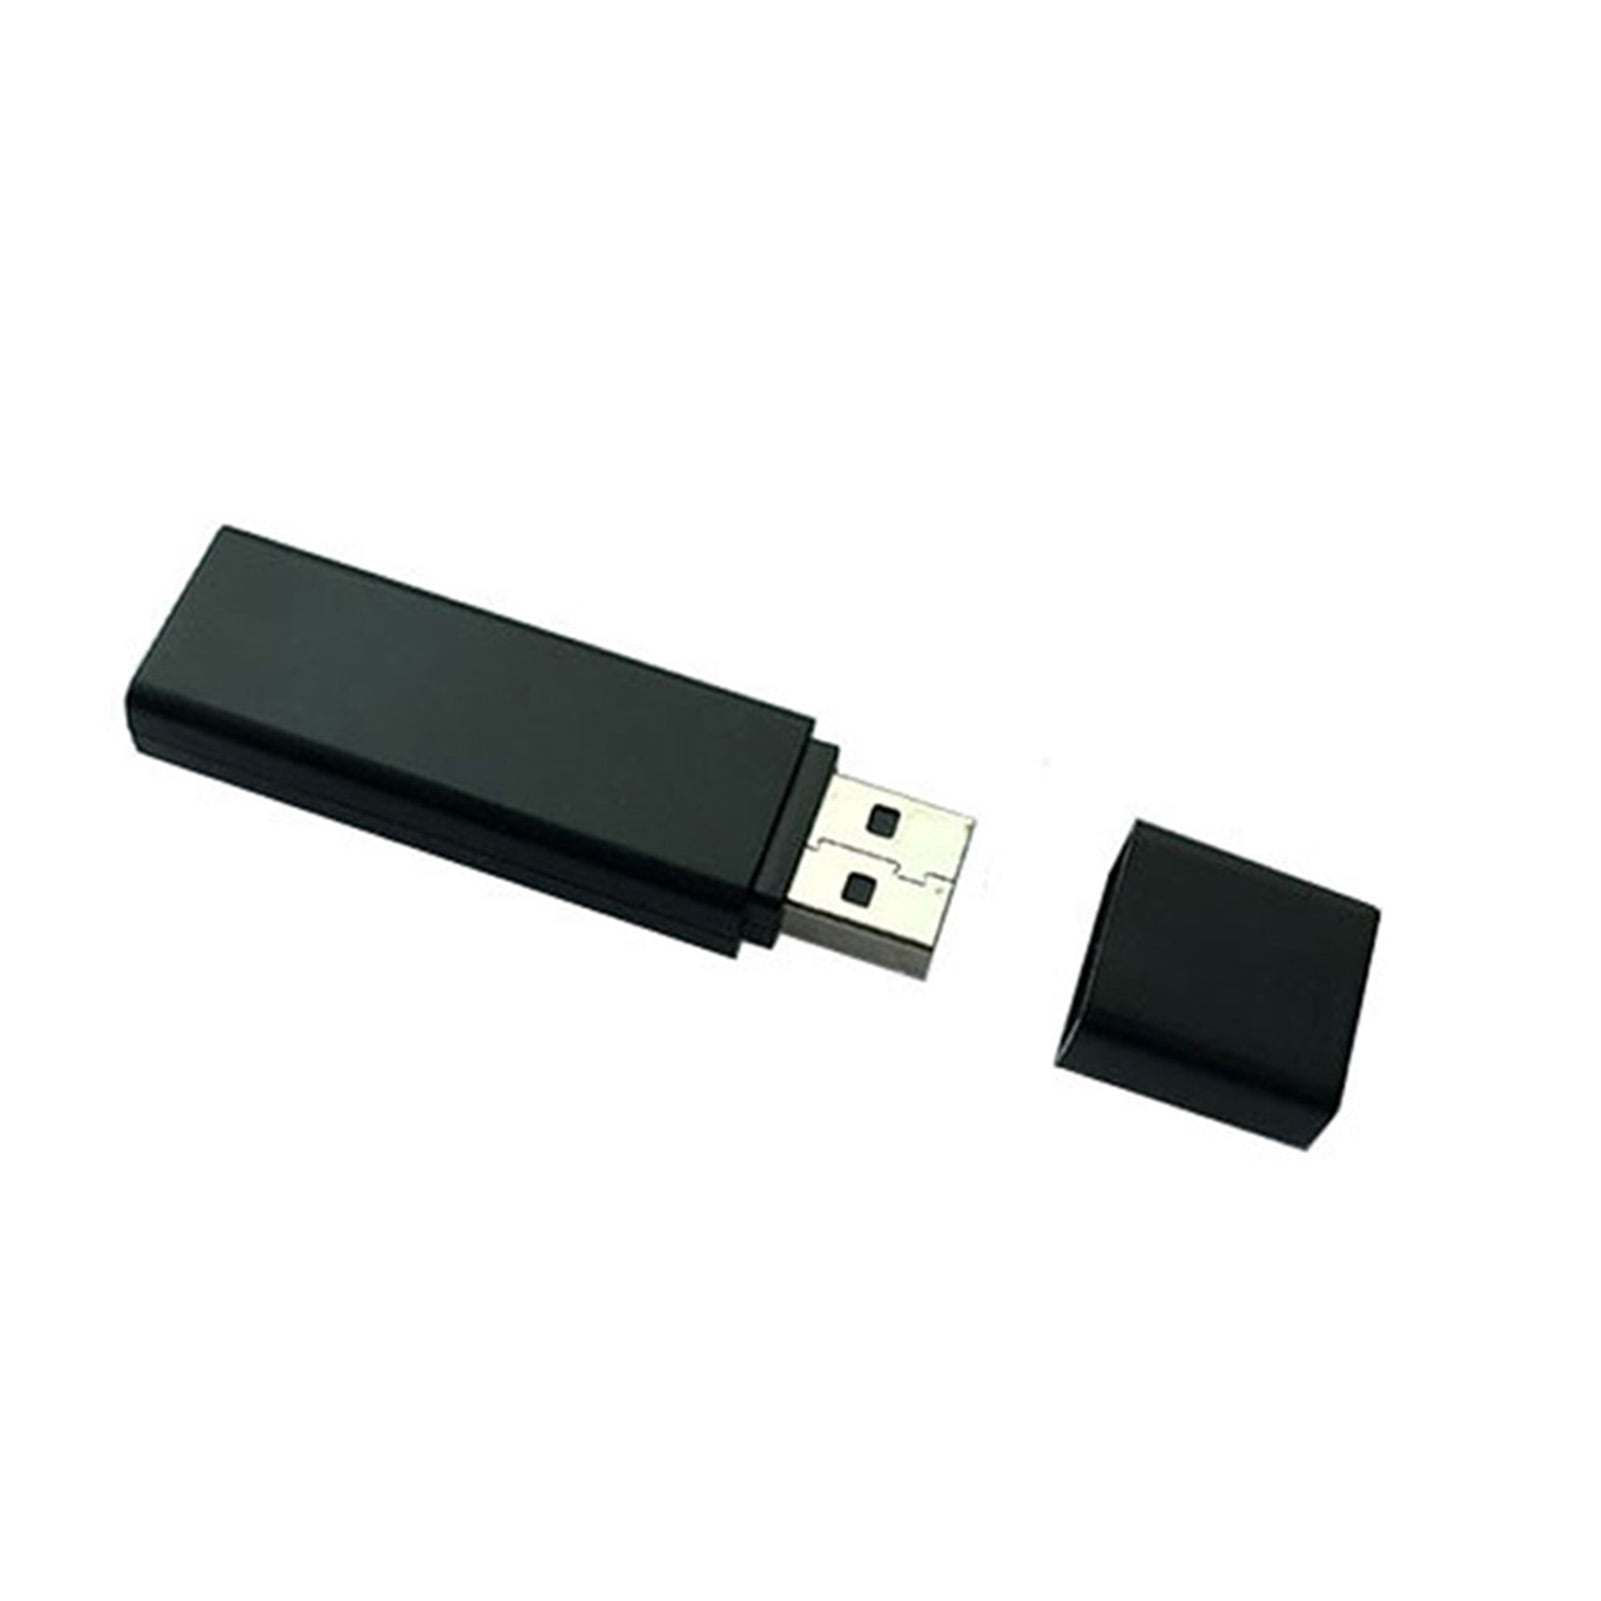 Anself USB Flash Drive ANT Compatible with Garmin Forerunner 310XT 405 405CX 410610910 011-02209-00 USB Flash Drive 